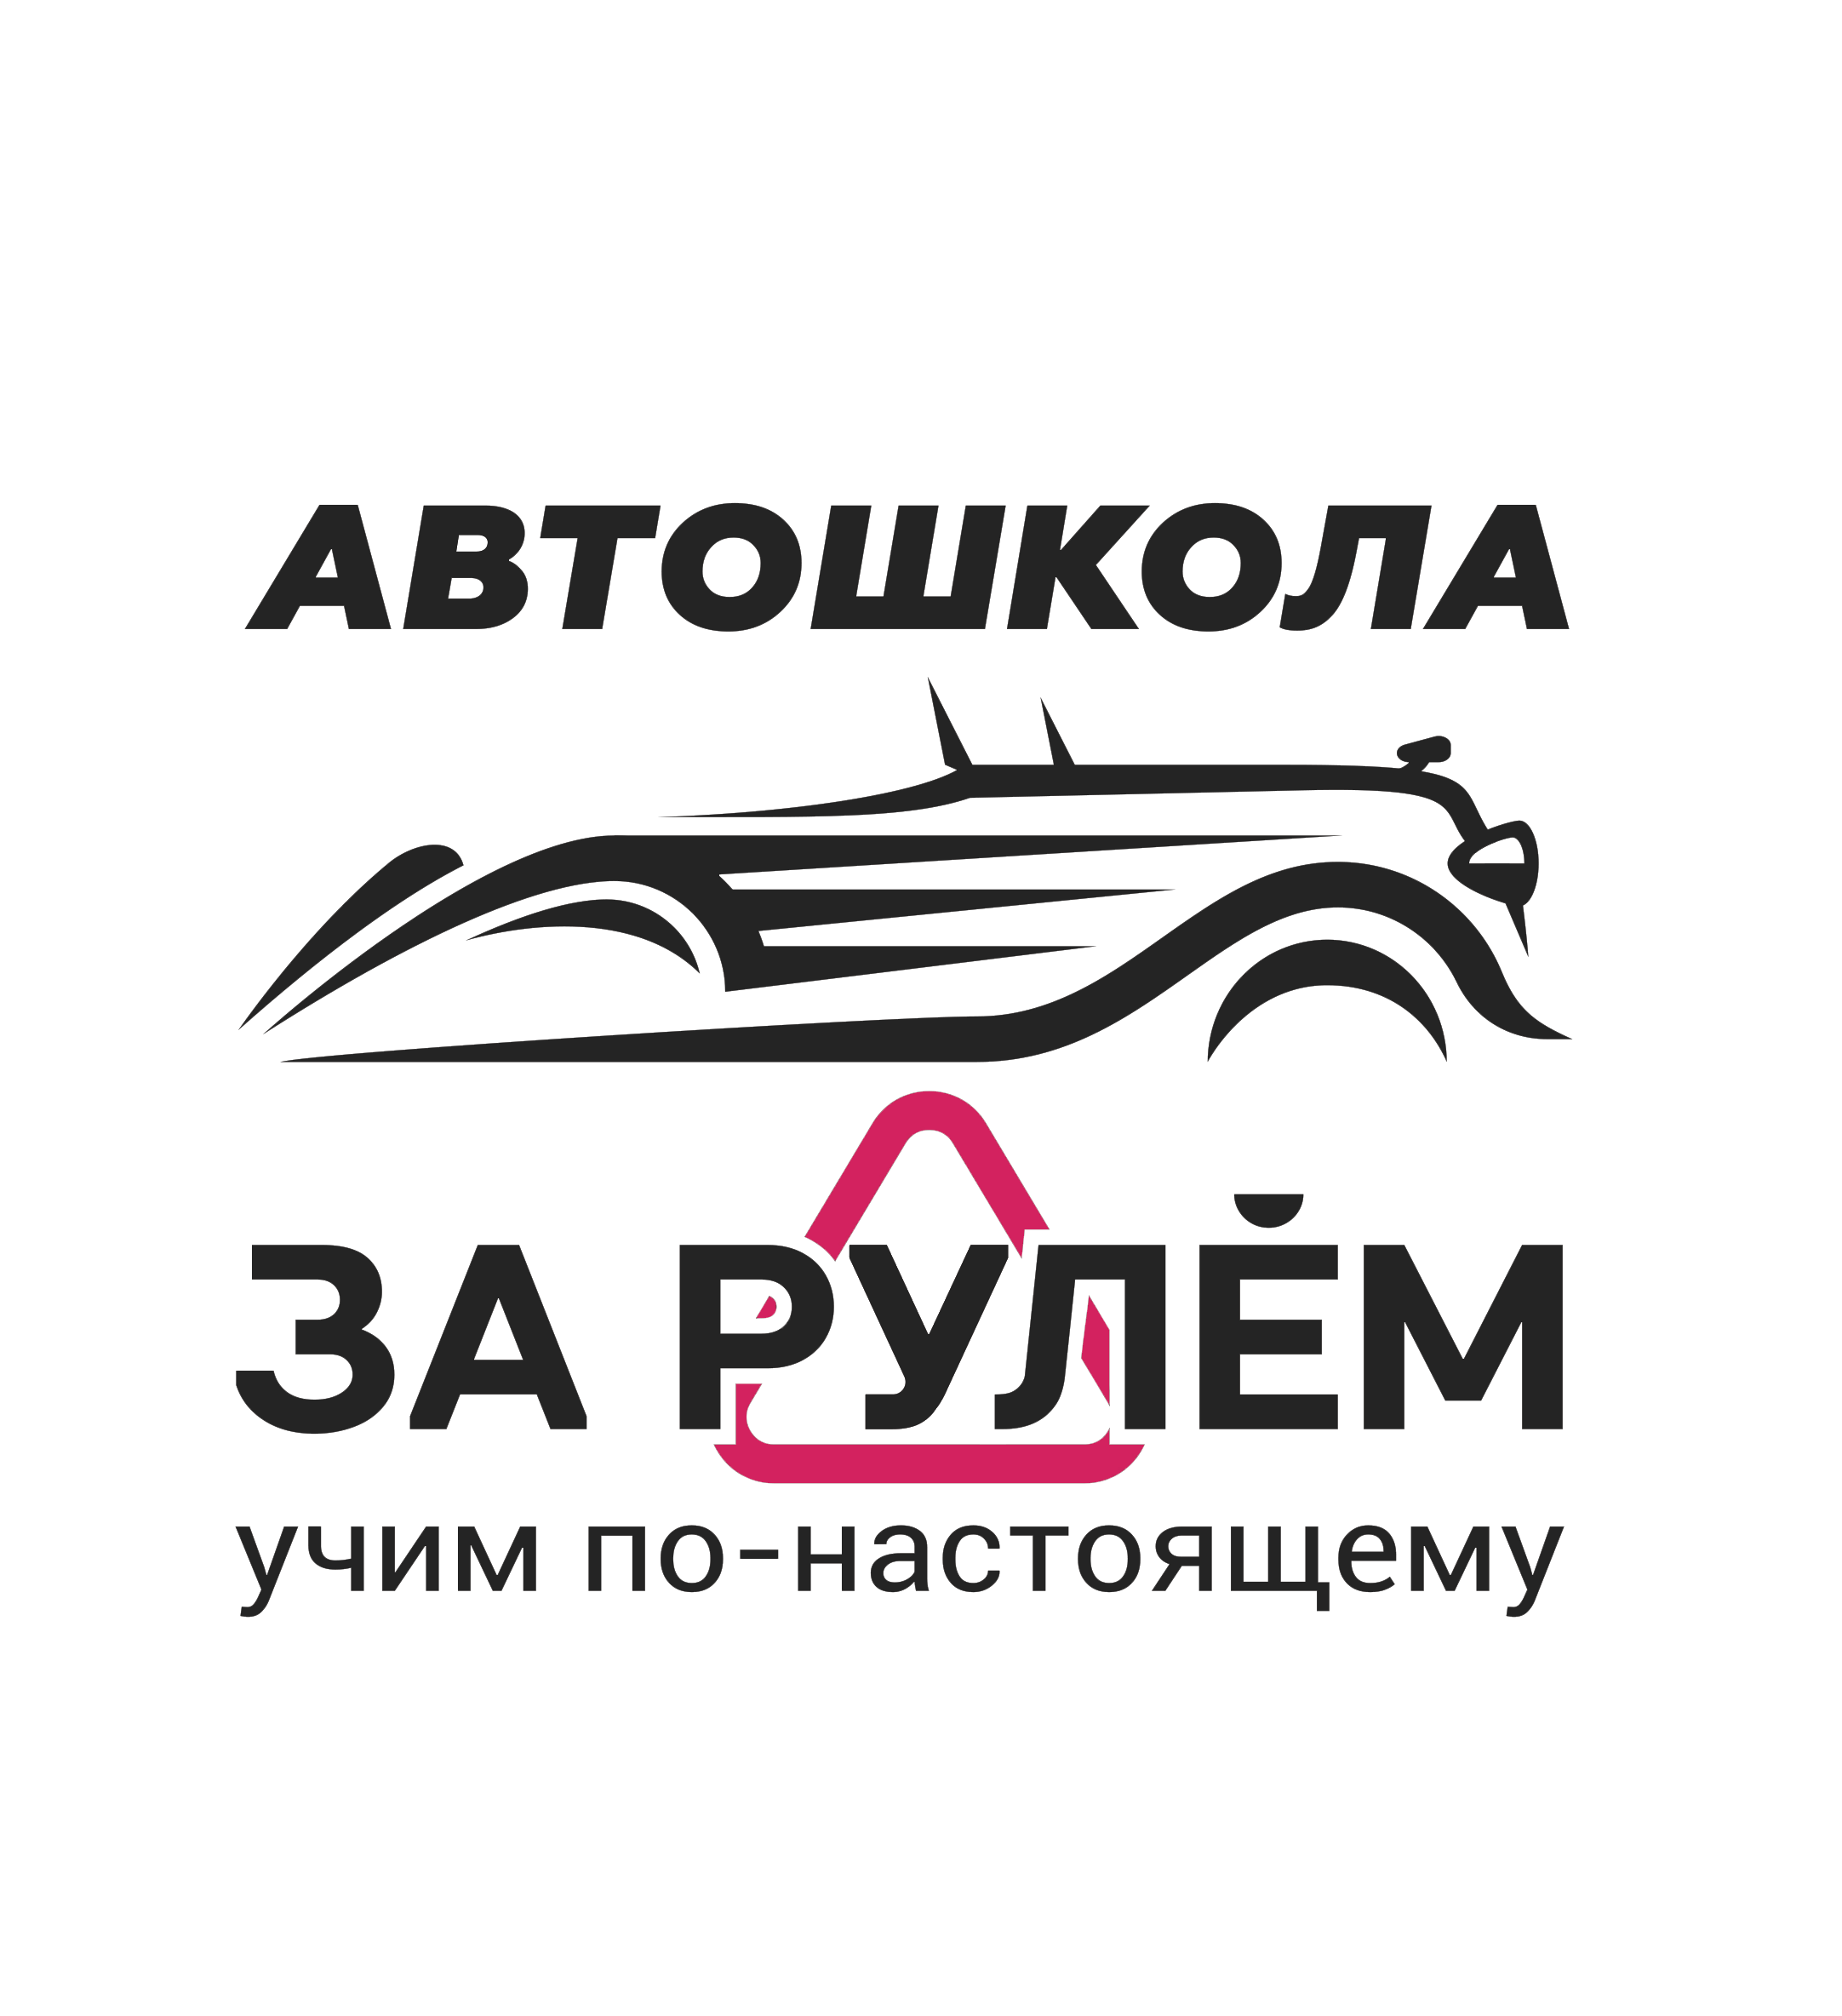 ЧОУПО «За рулем» - Город Новосибирск